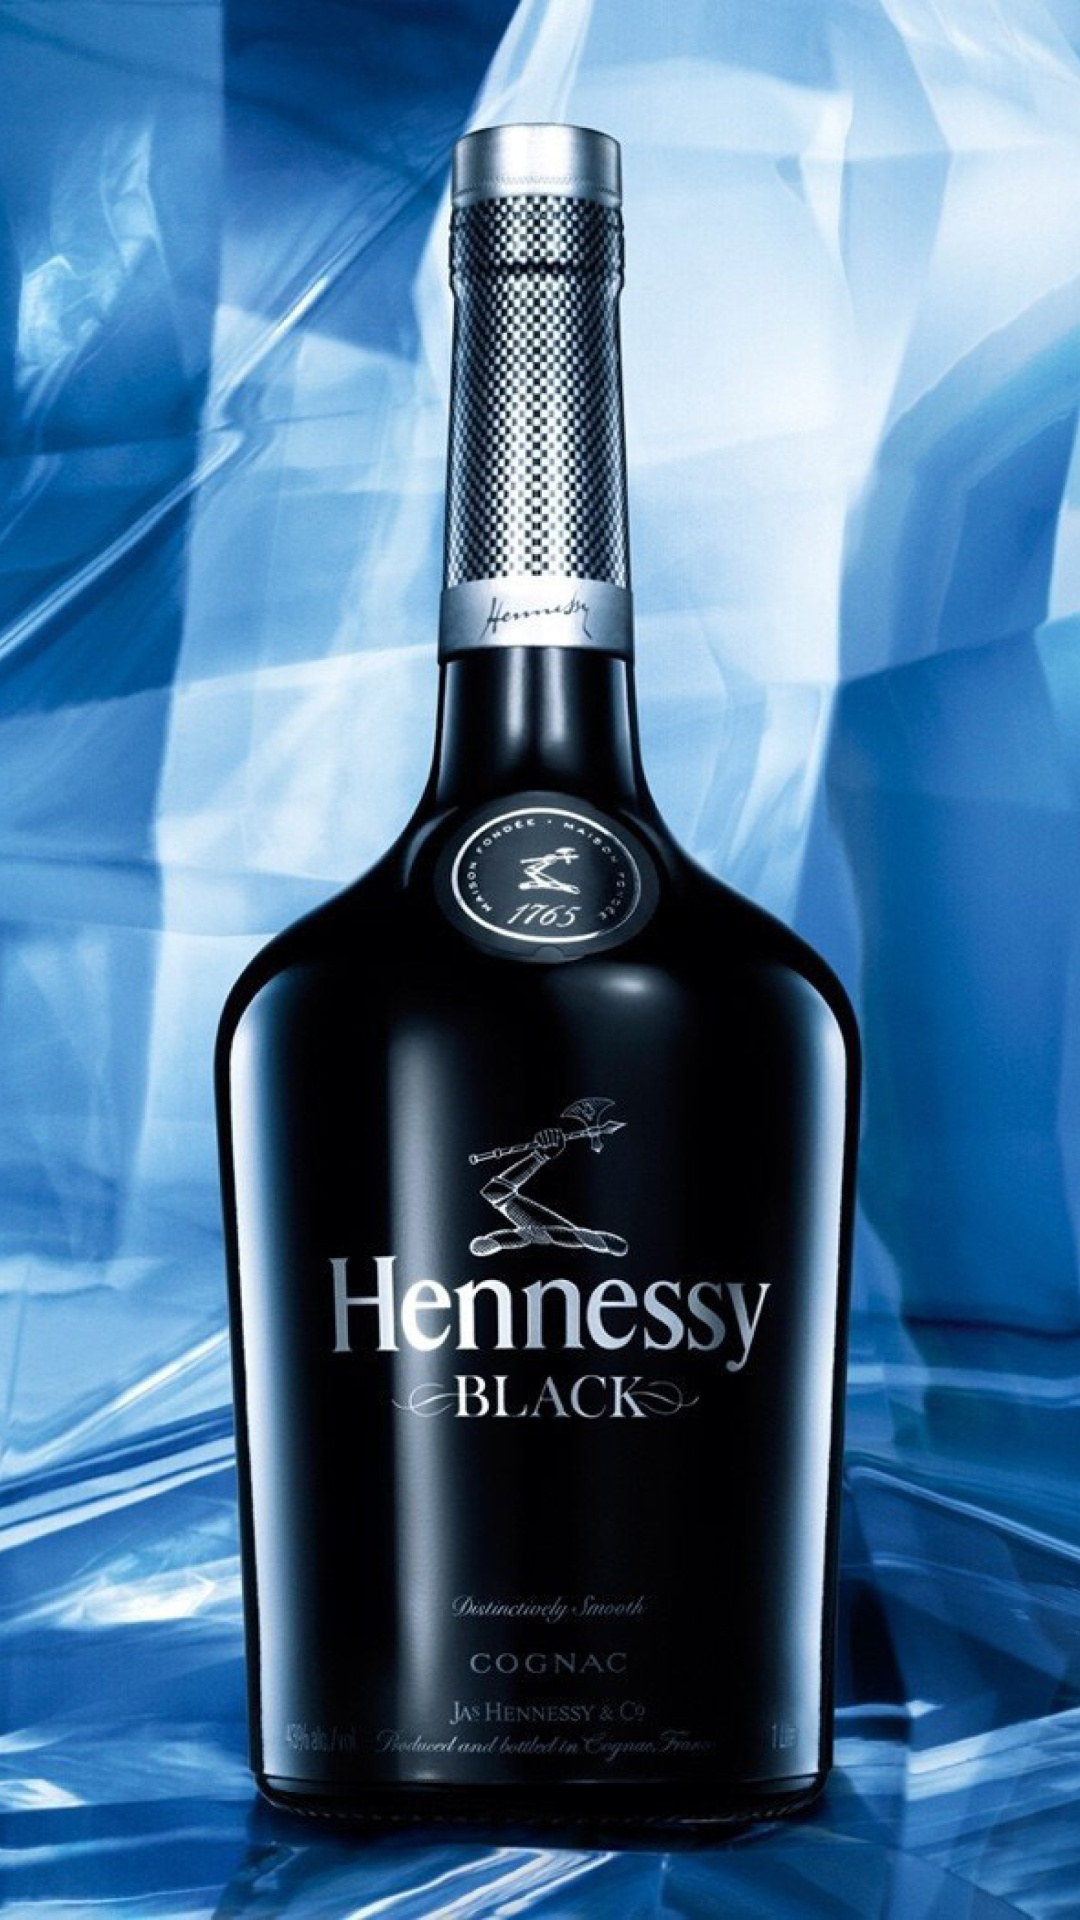 Бутылка Hennessy без смс